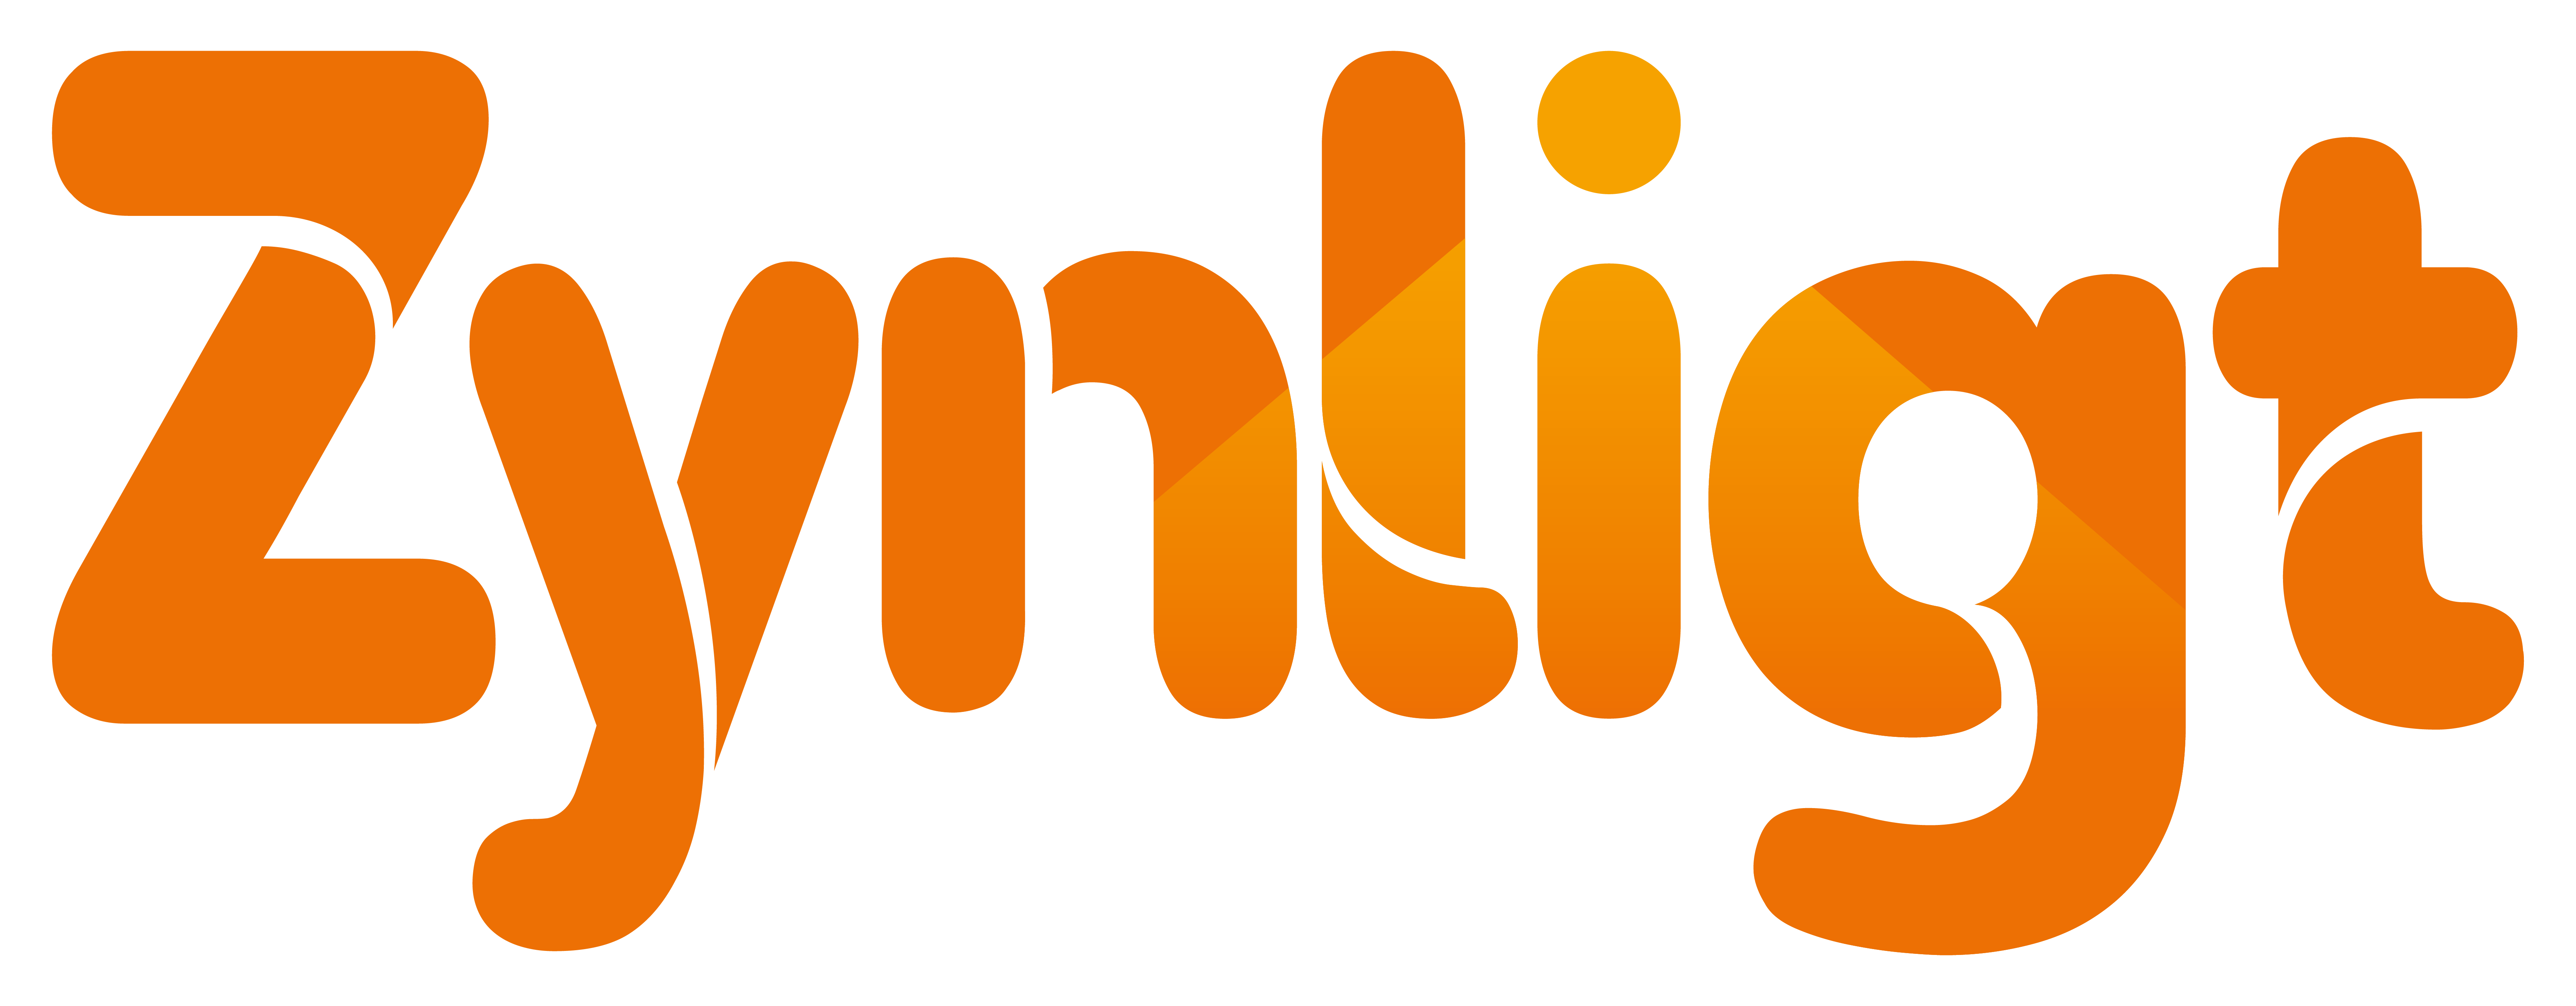 Zynligt logo